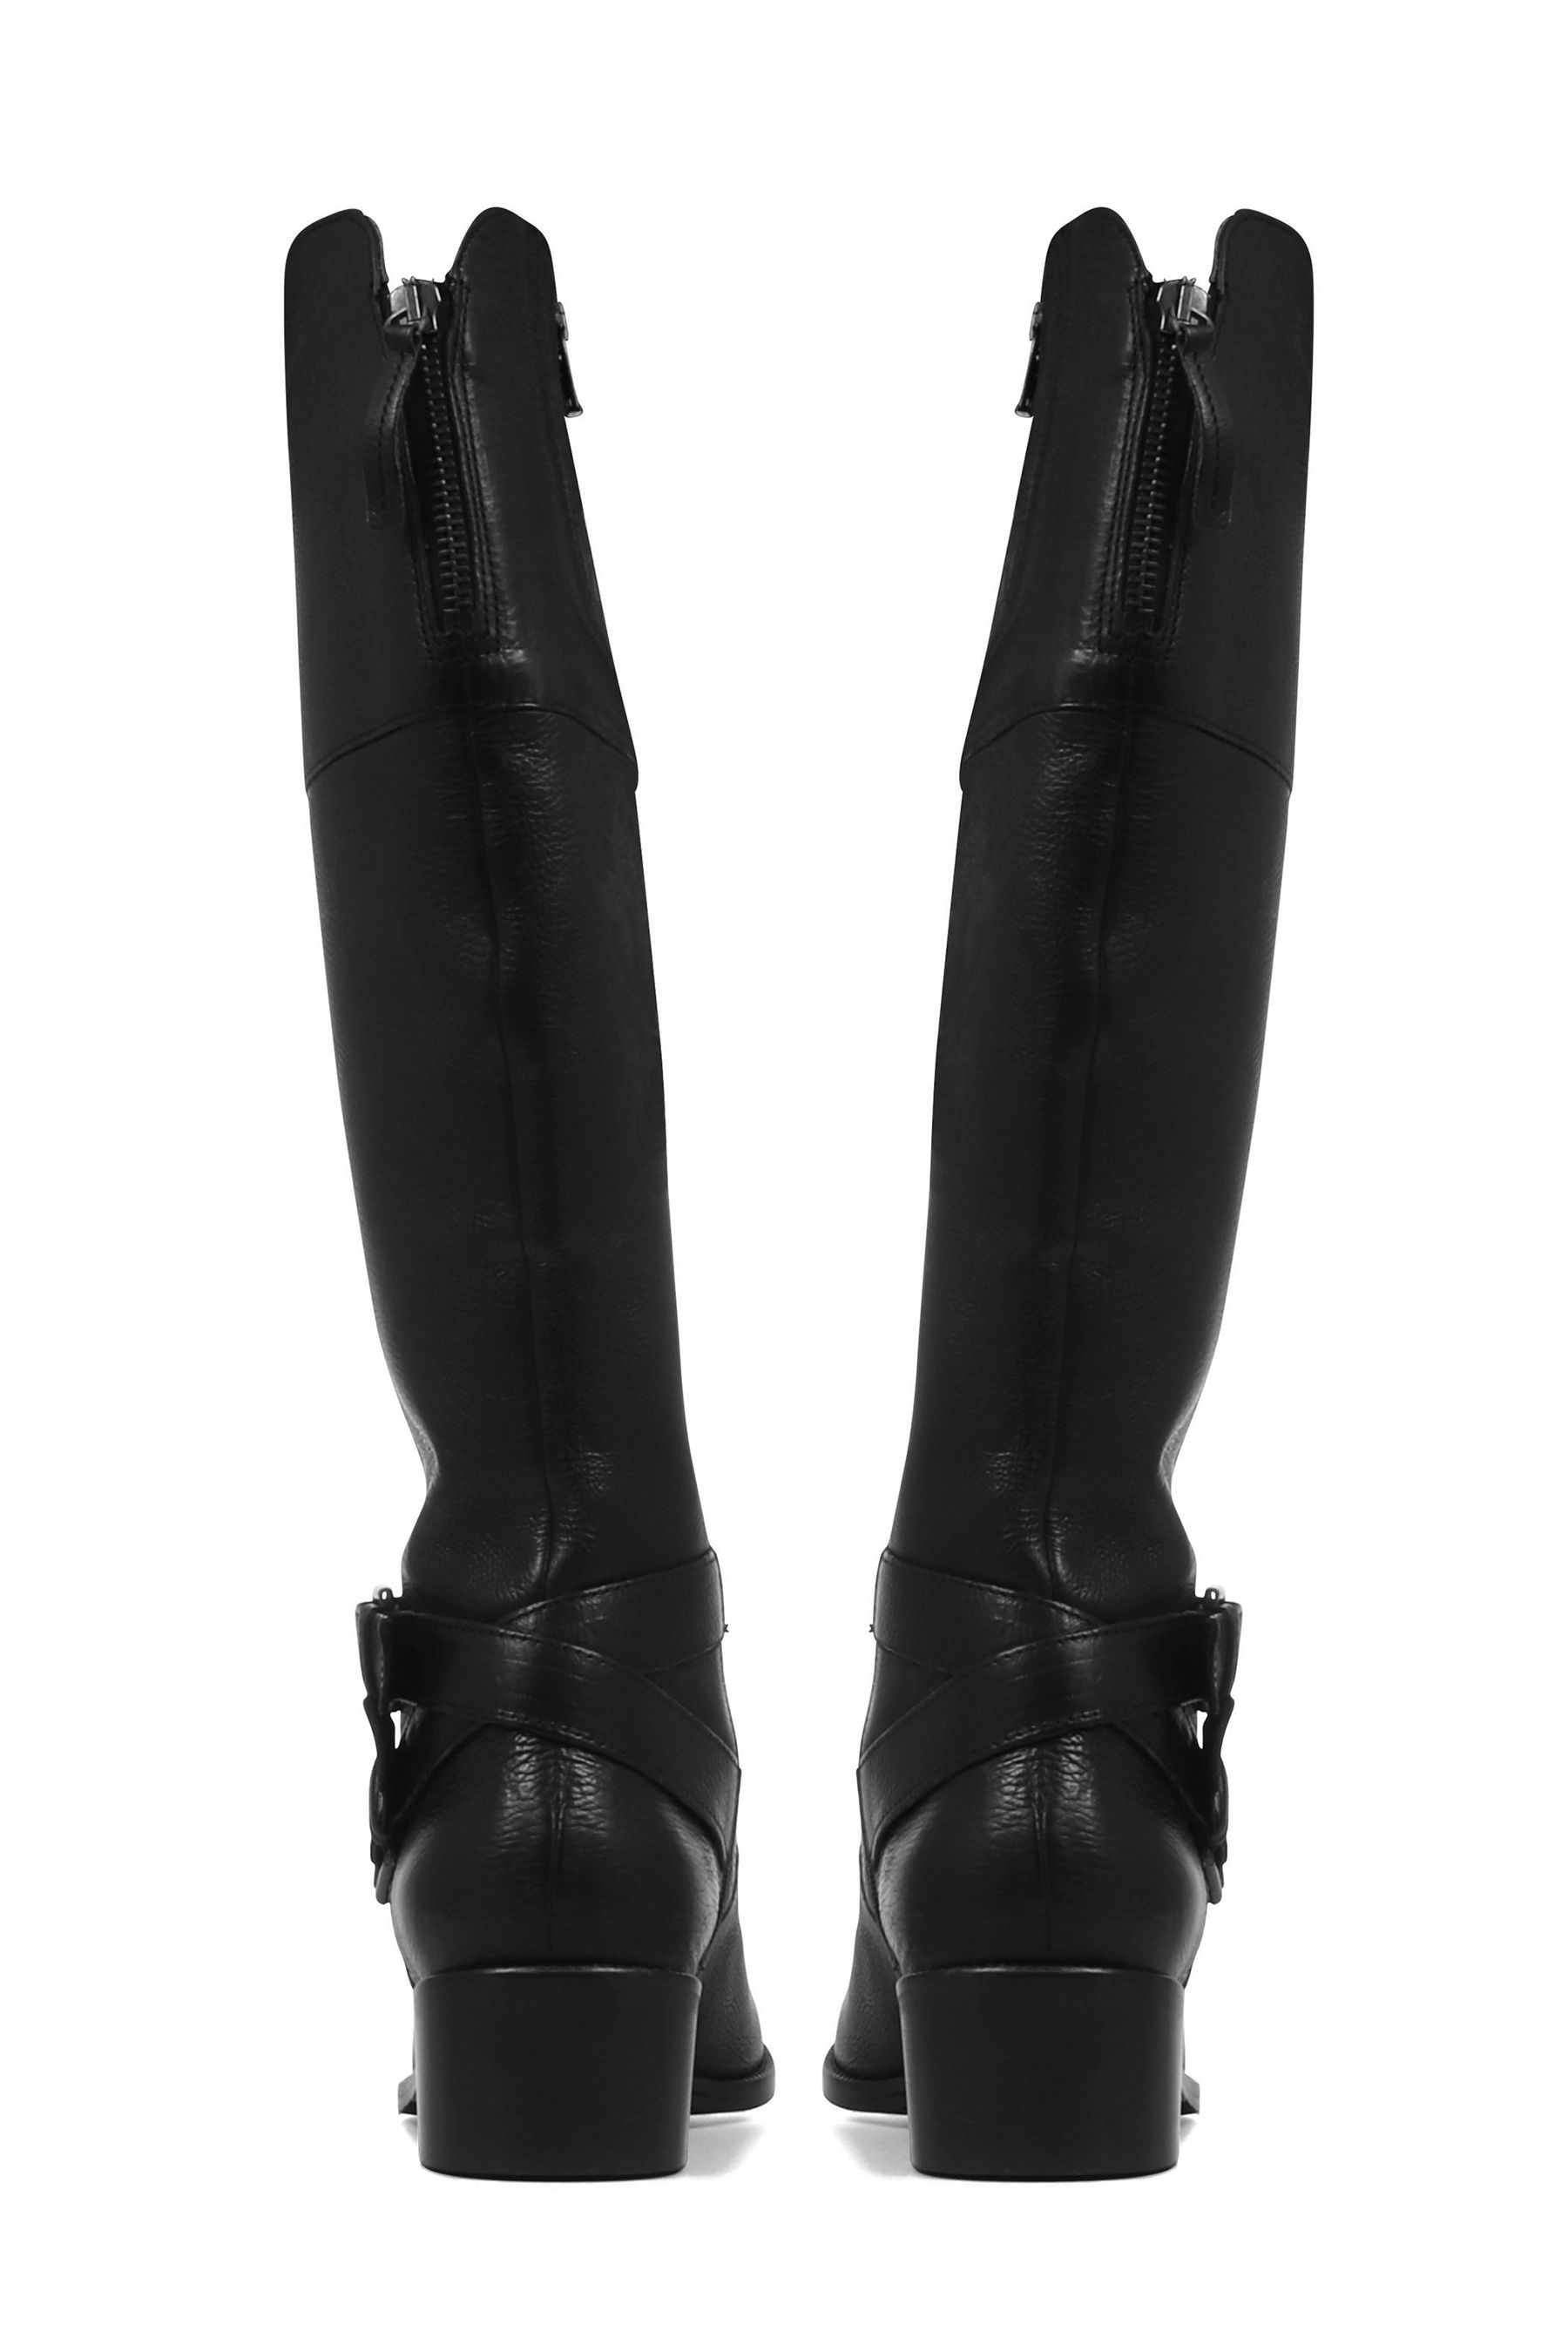 Buy Jones Bootmaker Black Slim Fit Leather Ladies Knee High Boots from ...